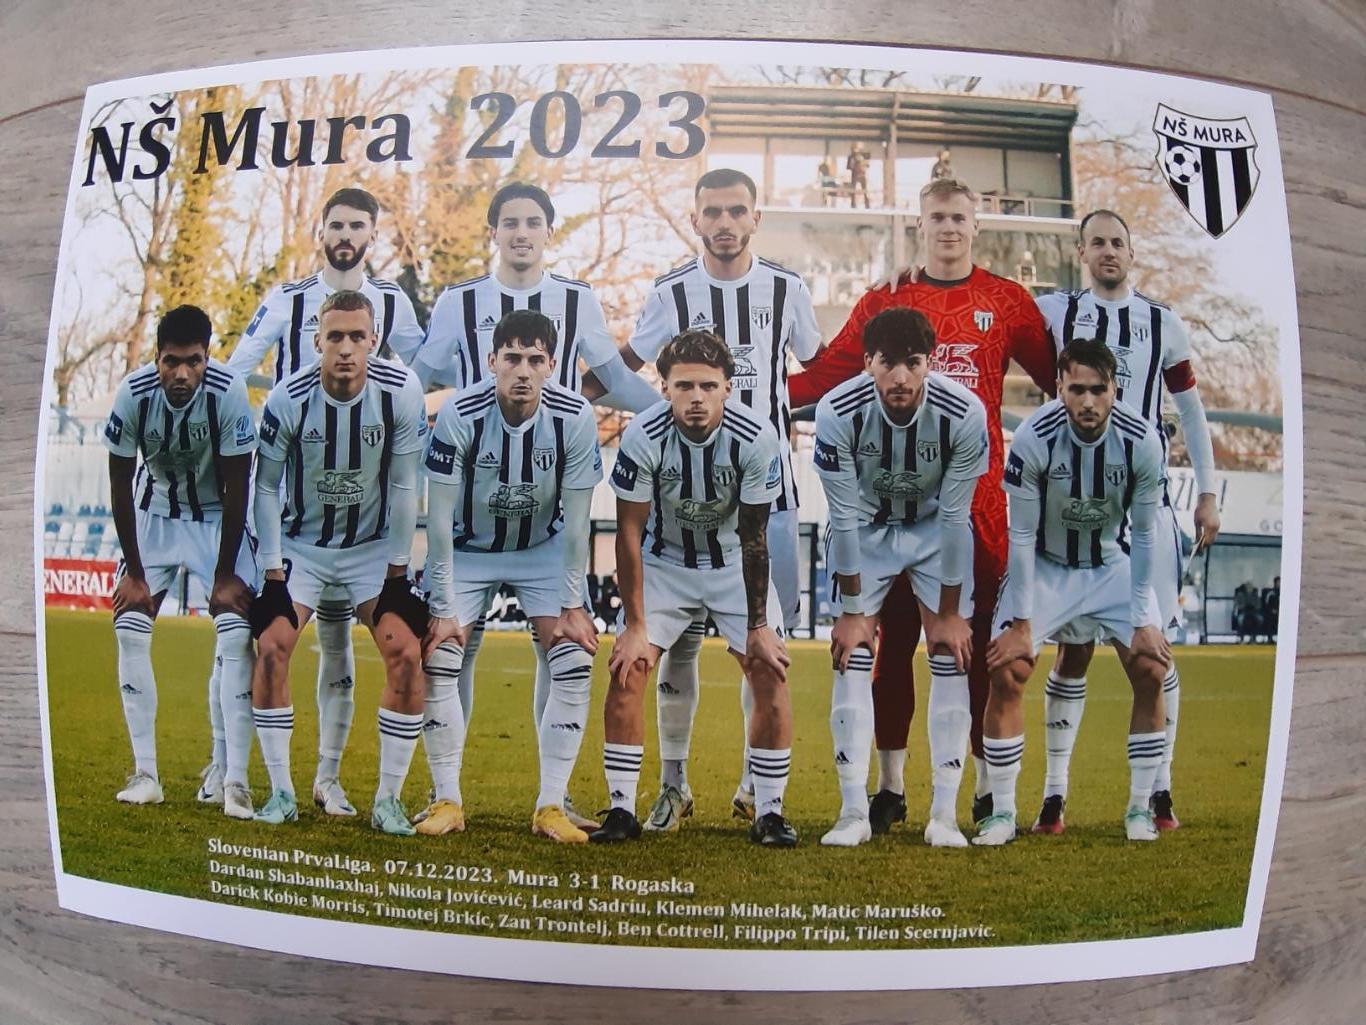 NS Mura.2023 (Slovenia)